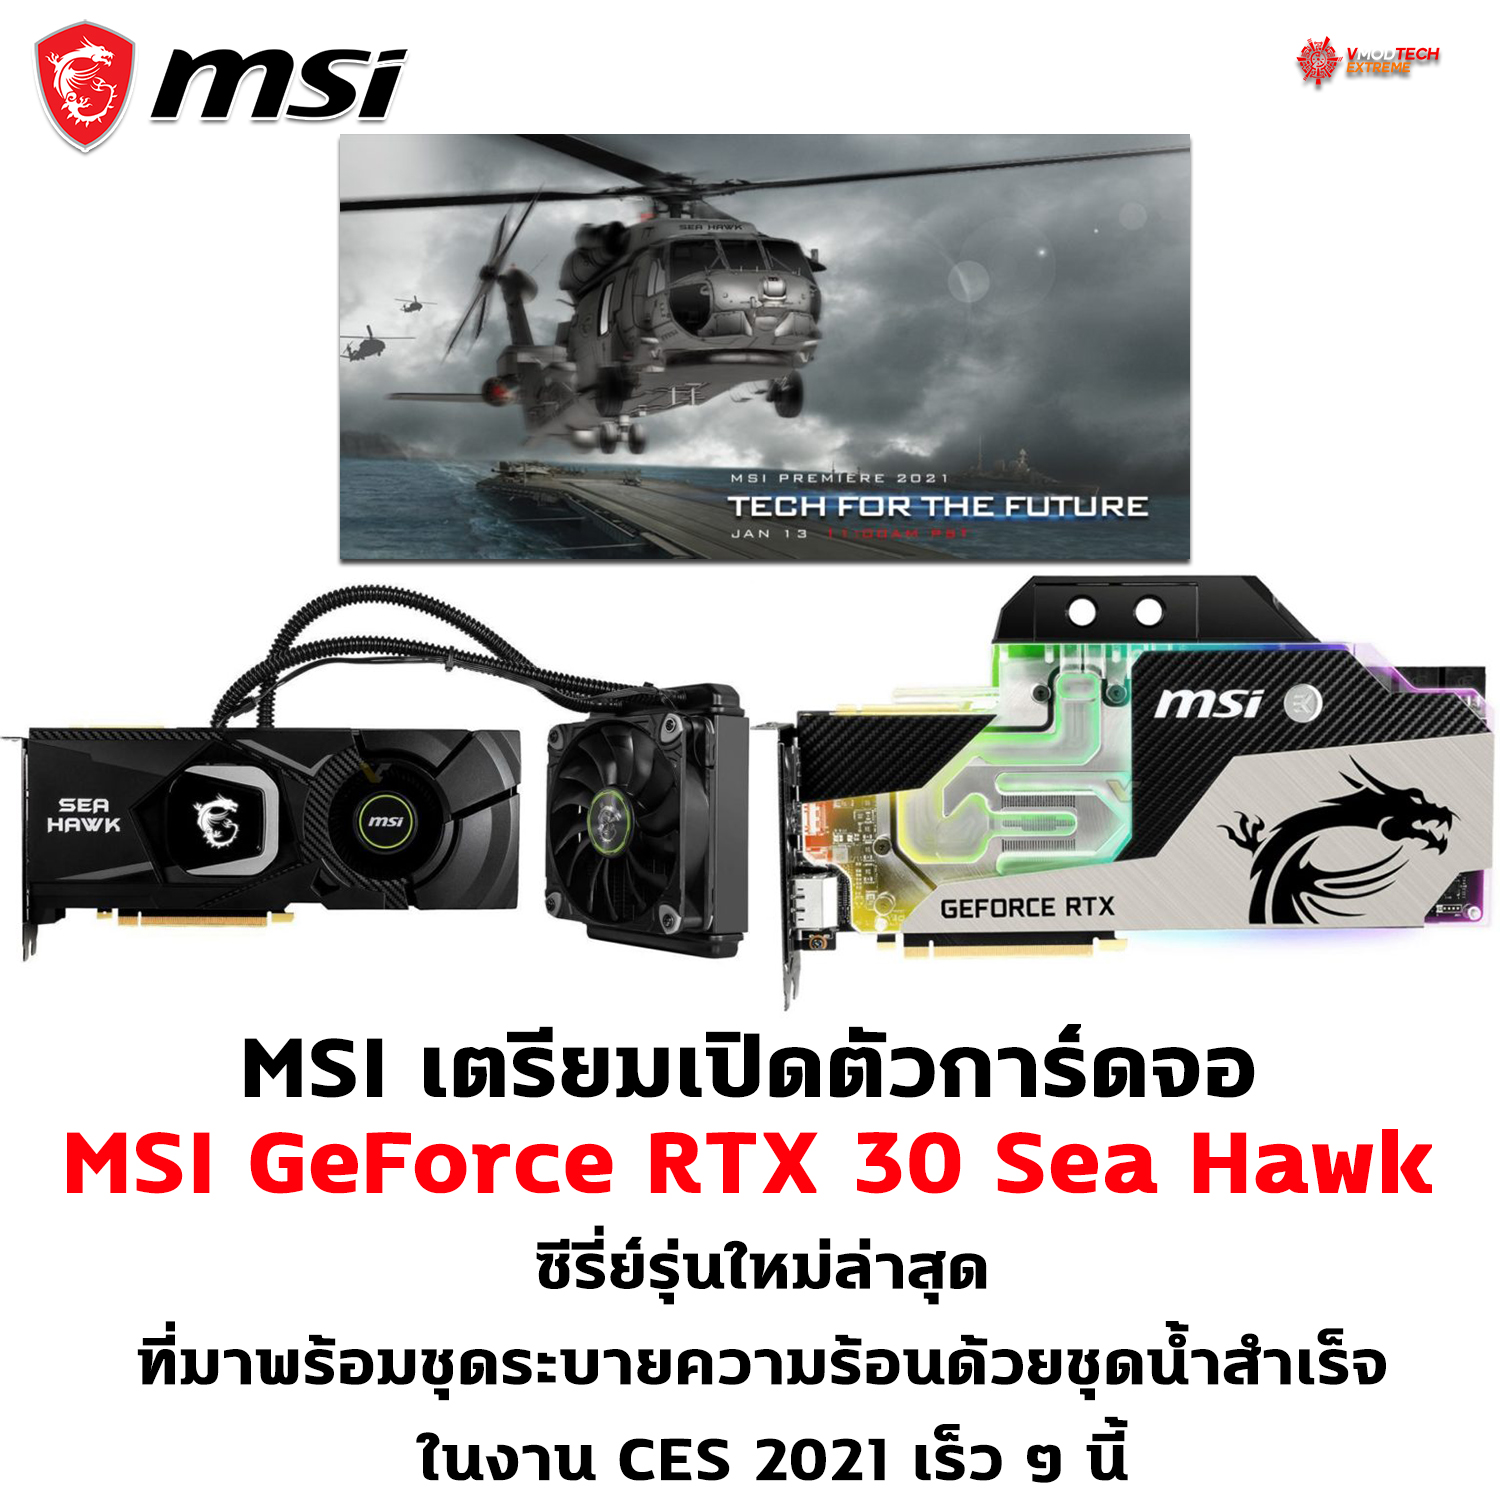 msi geforce rtx 30 sea hawk MSI เตรียมเปิดตัวการ์ดจอ MSI GeForce RTX 30 Sea Hawk ซีรี่ย์รุ่นใหม่ล่าสุดที่มาพร้อมชุดระบายความร้อนด้วยน้ำ Water cooled series ในงาน CES 2021